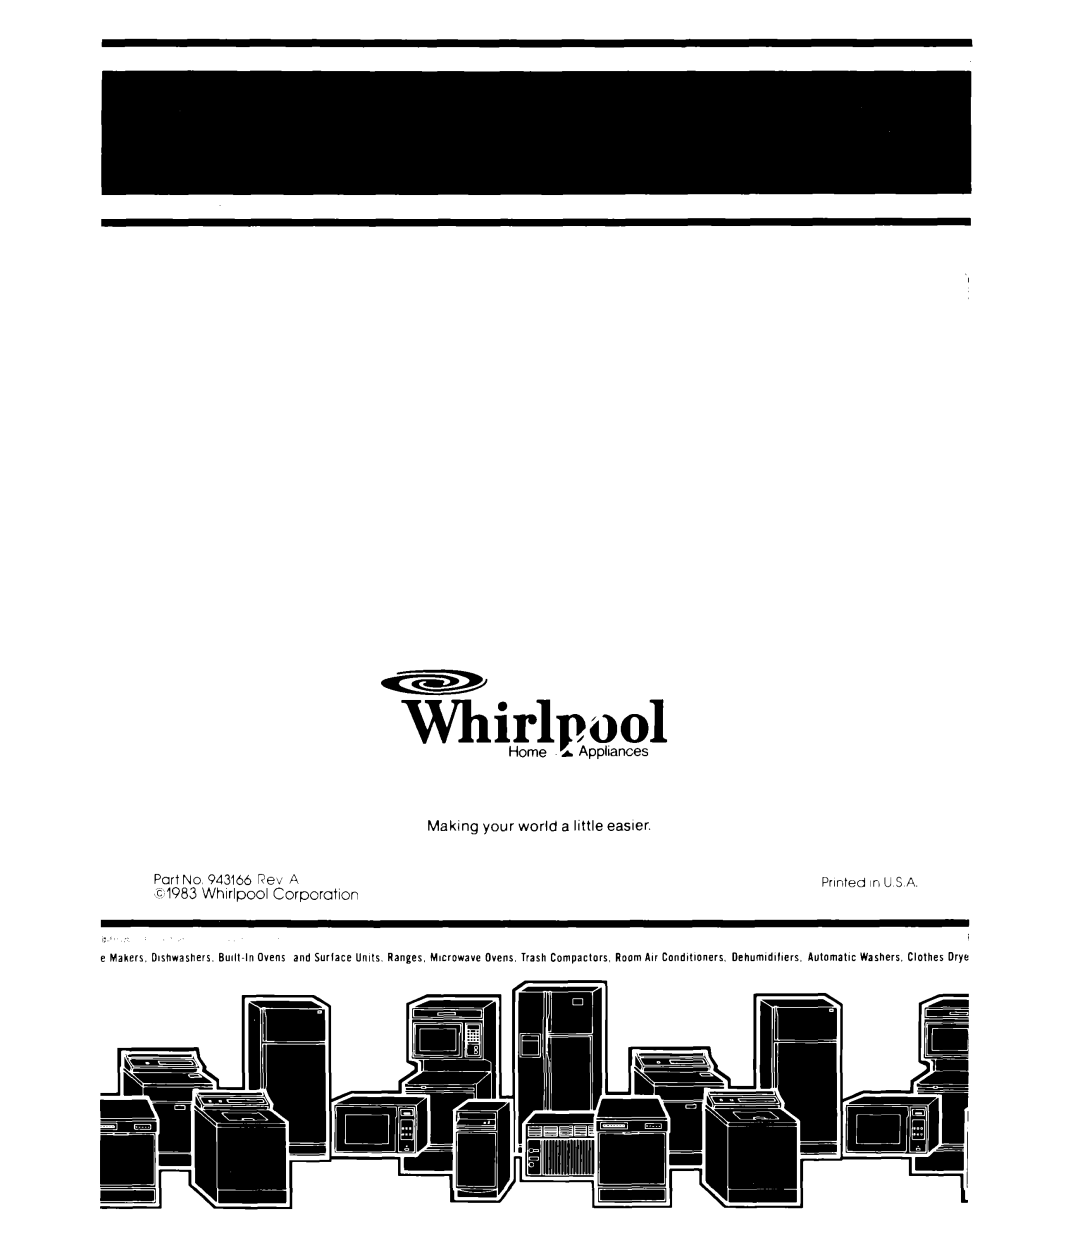 Whirlpool ET20MK TKirlpool, Home, b /Appliances, Making your world a little easier, 943166, Rev A, ‘S.1983, Corporation 